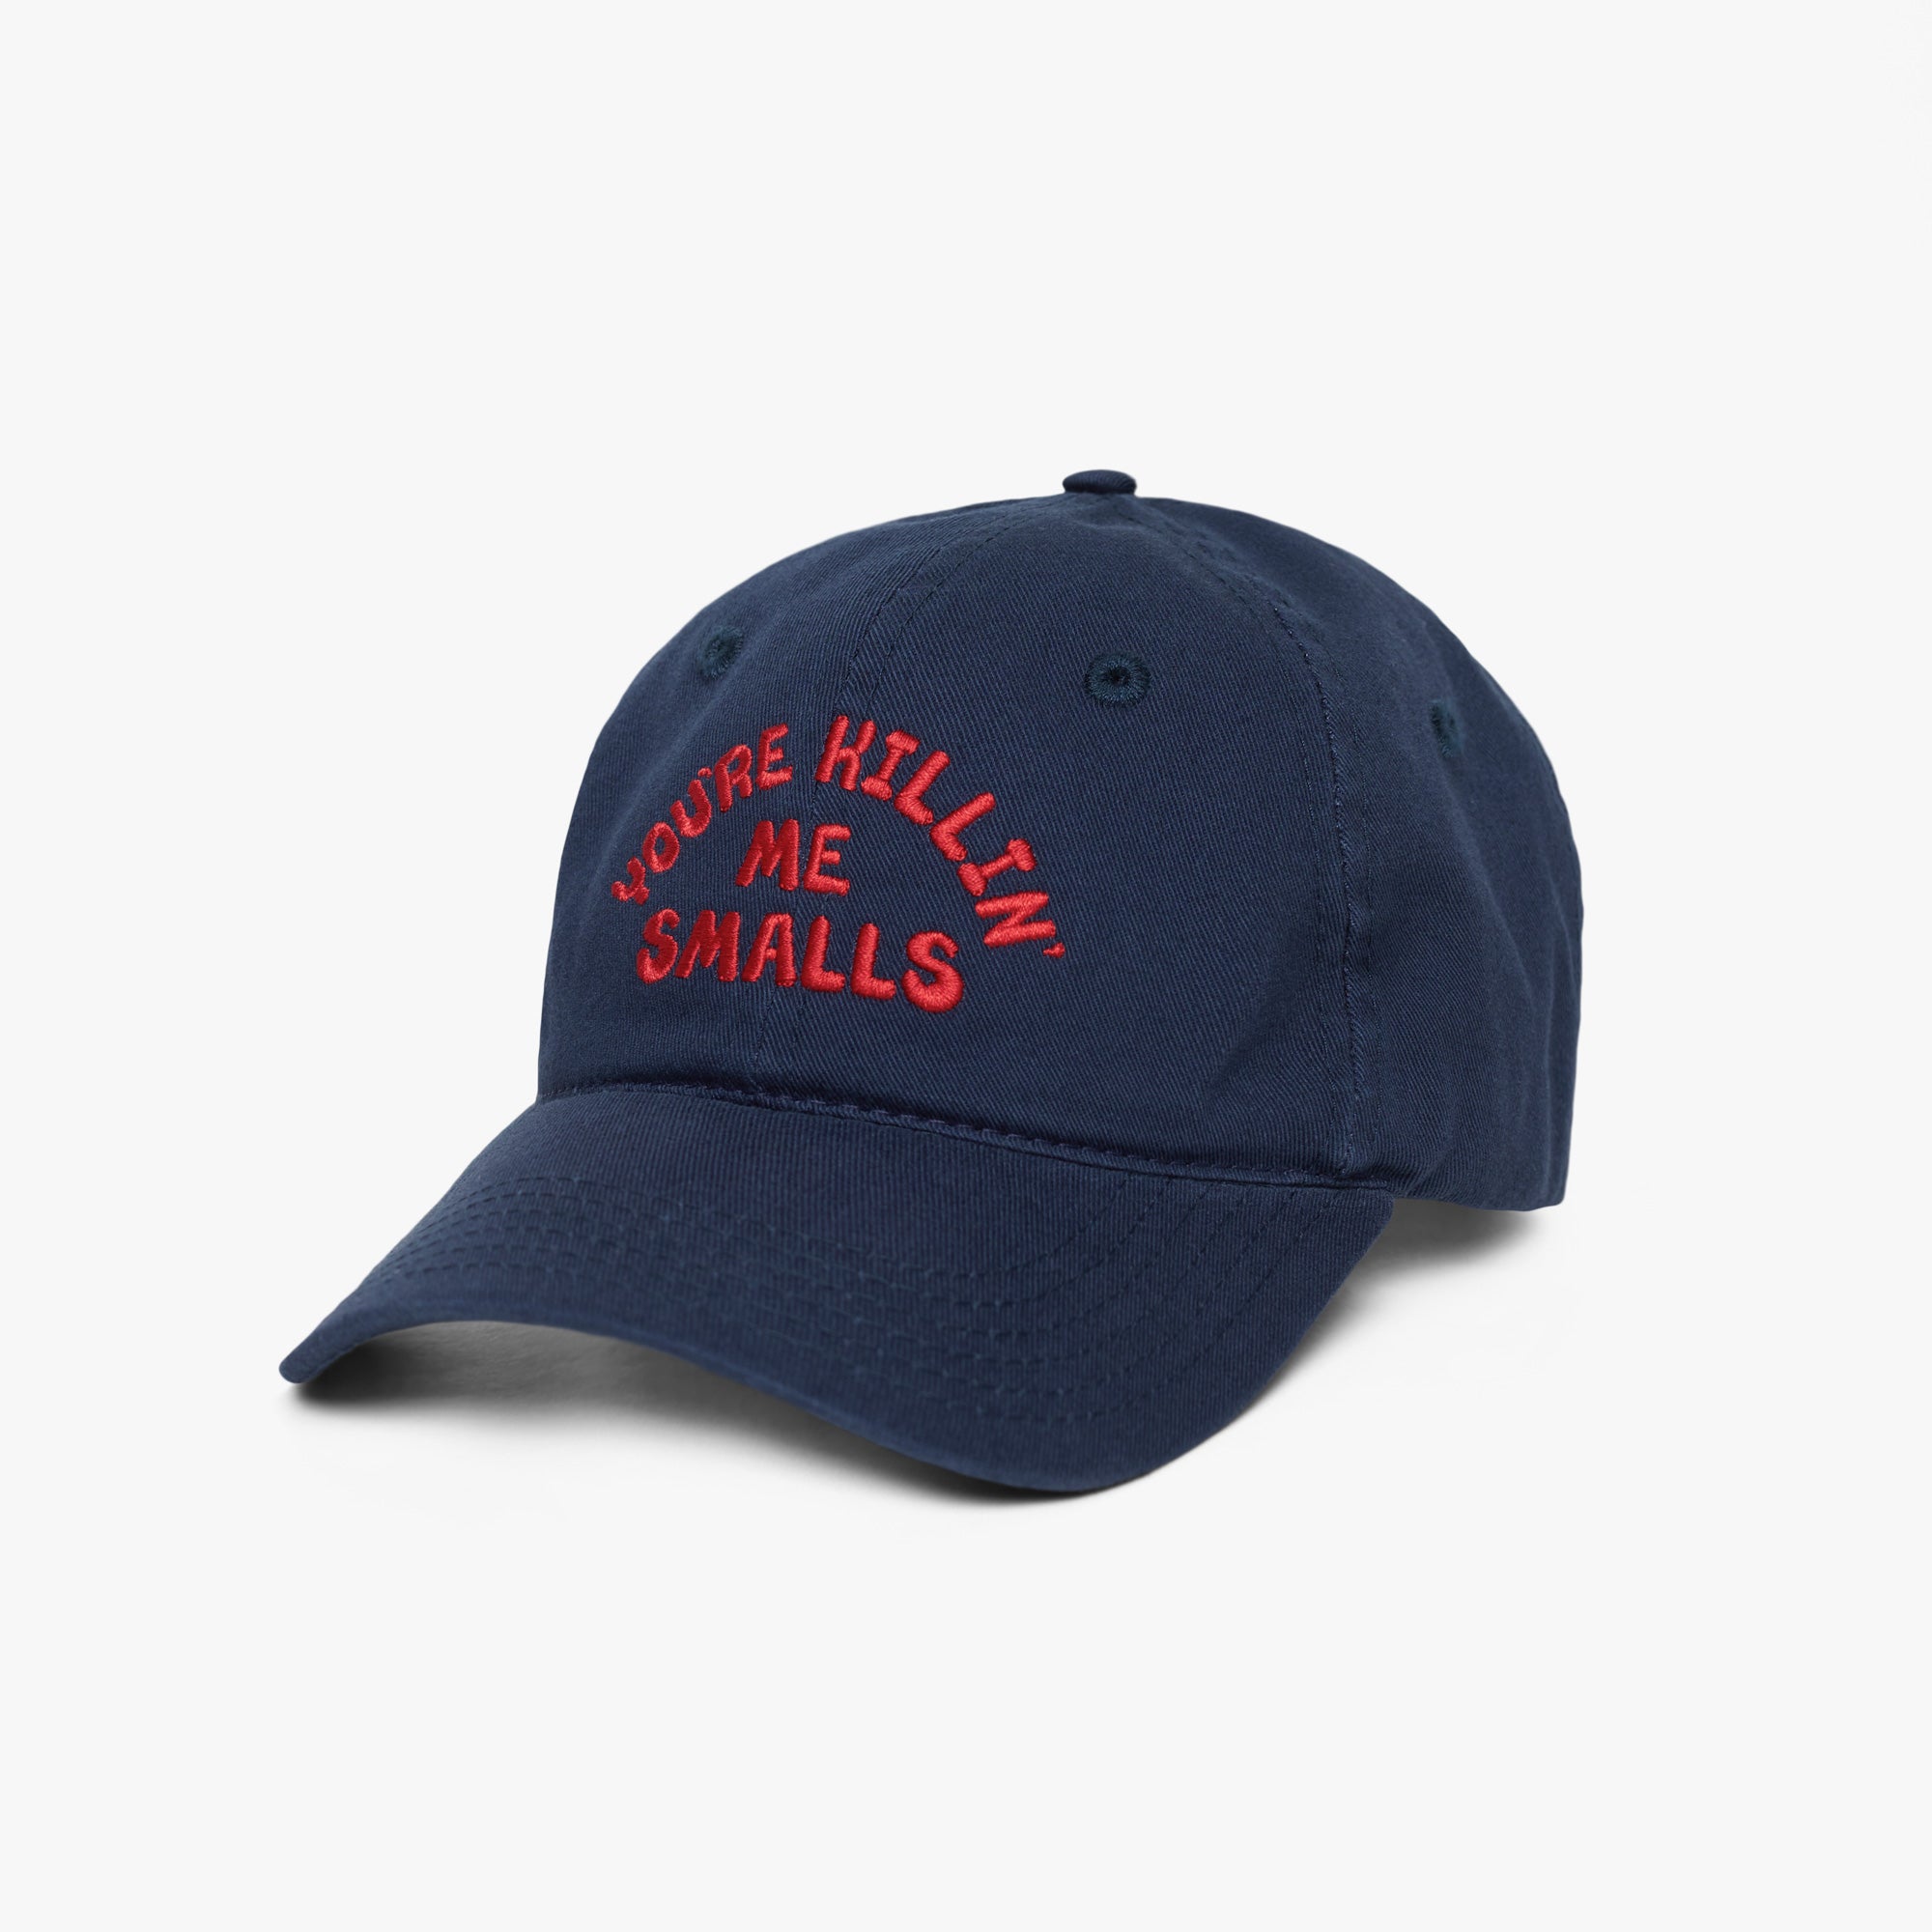 You're Killin' Me Smalls Dad Hat